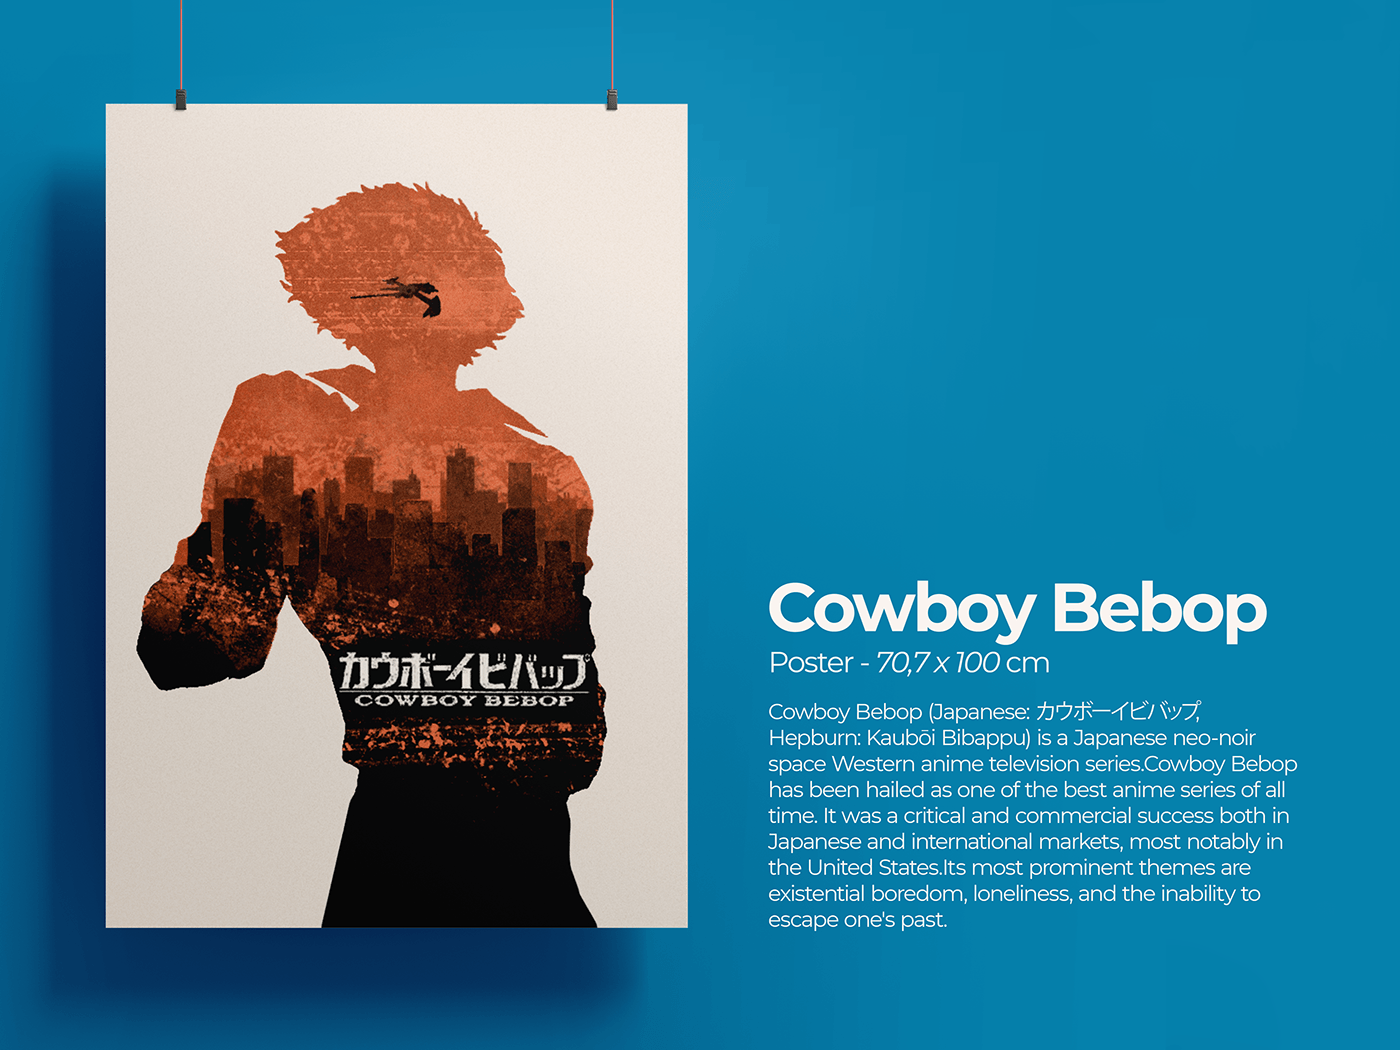 poster Poster Design posterdesign poster art posters art artwork cowboy bebop anime fanart